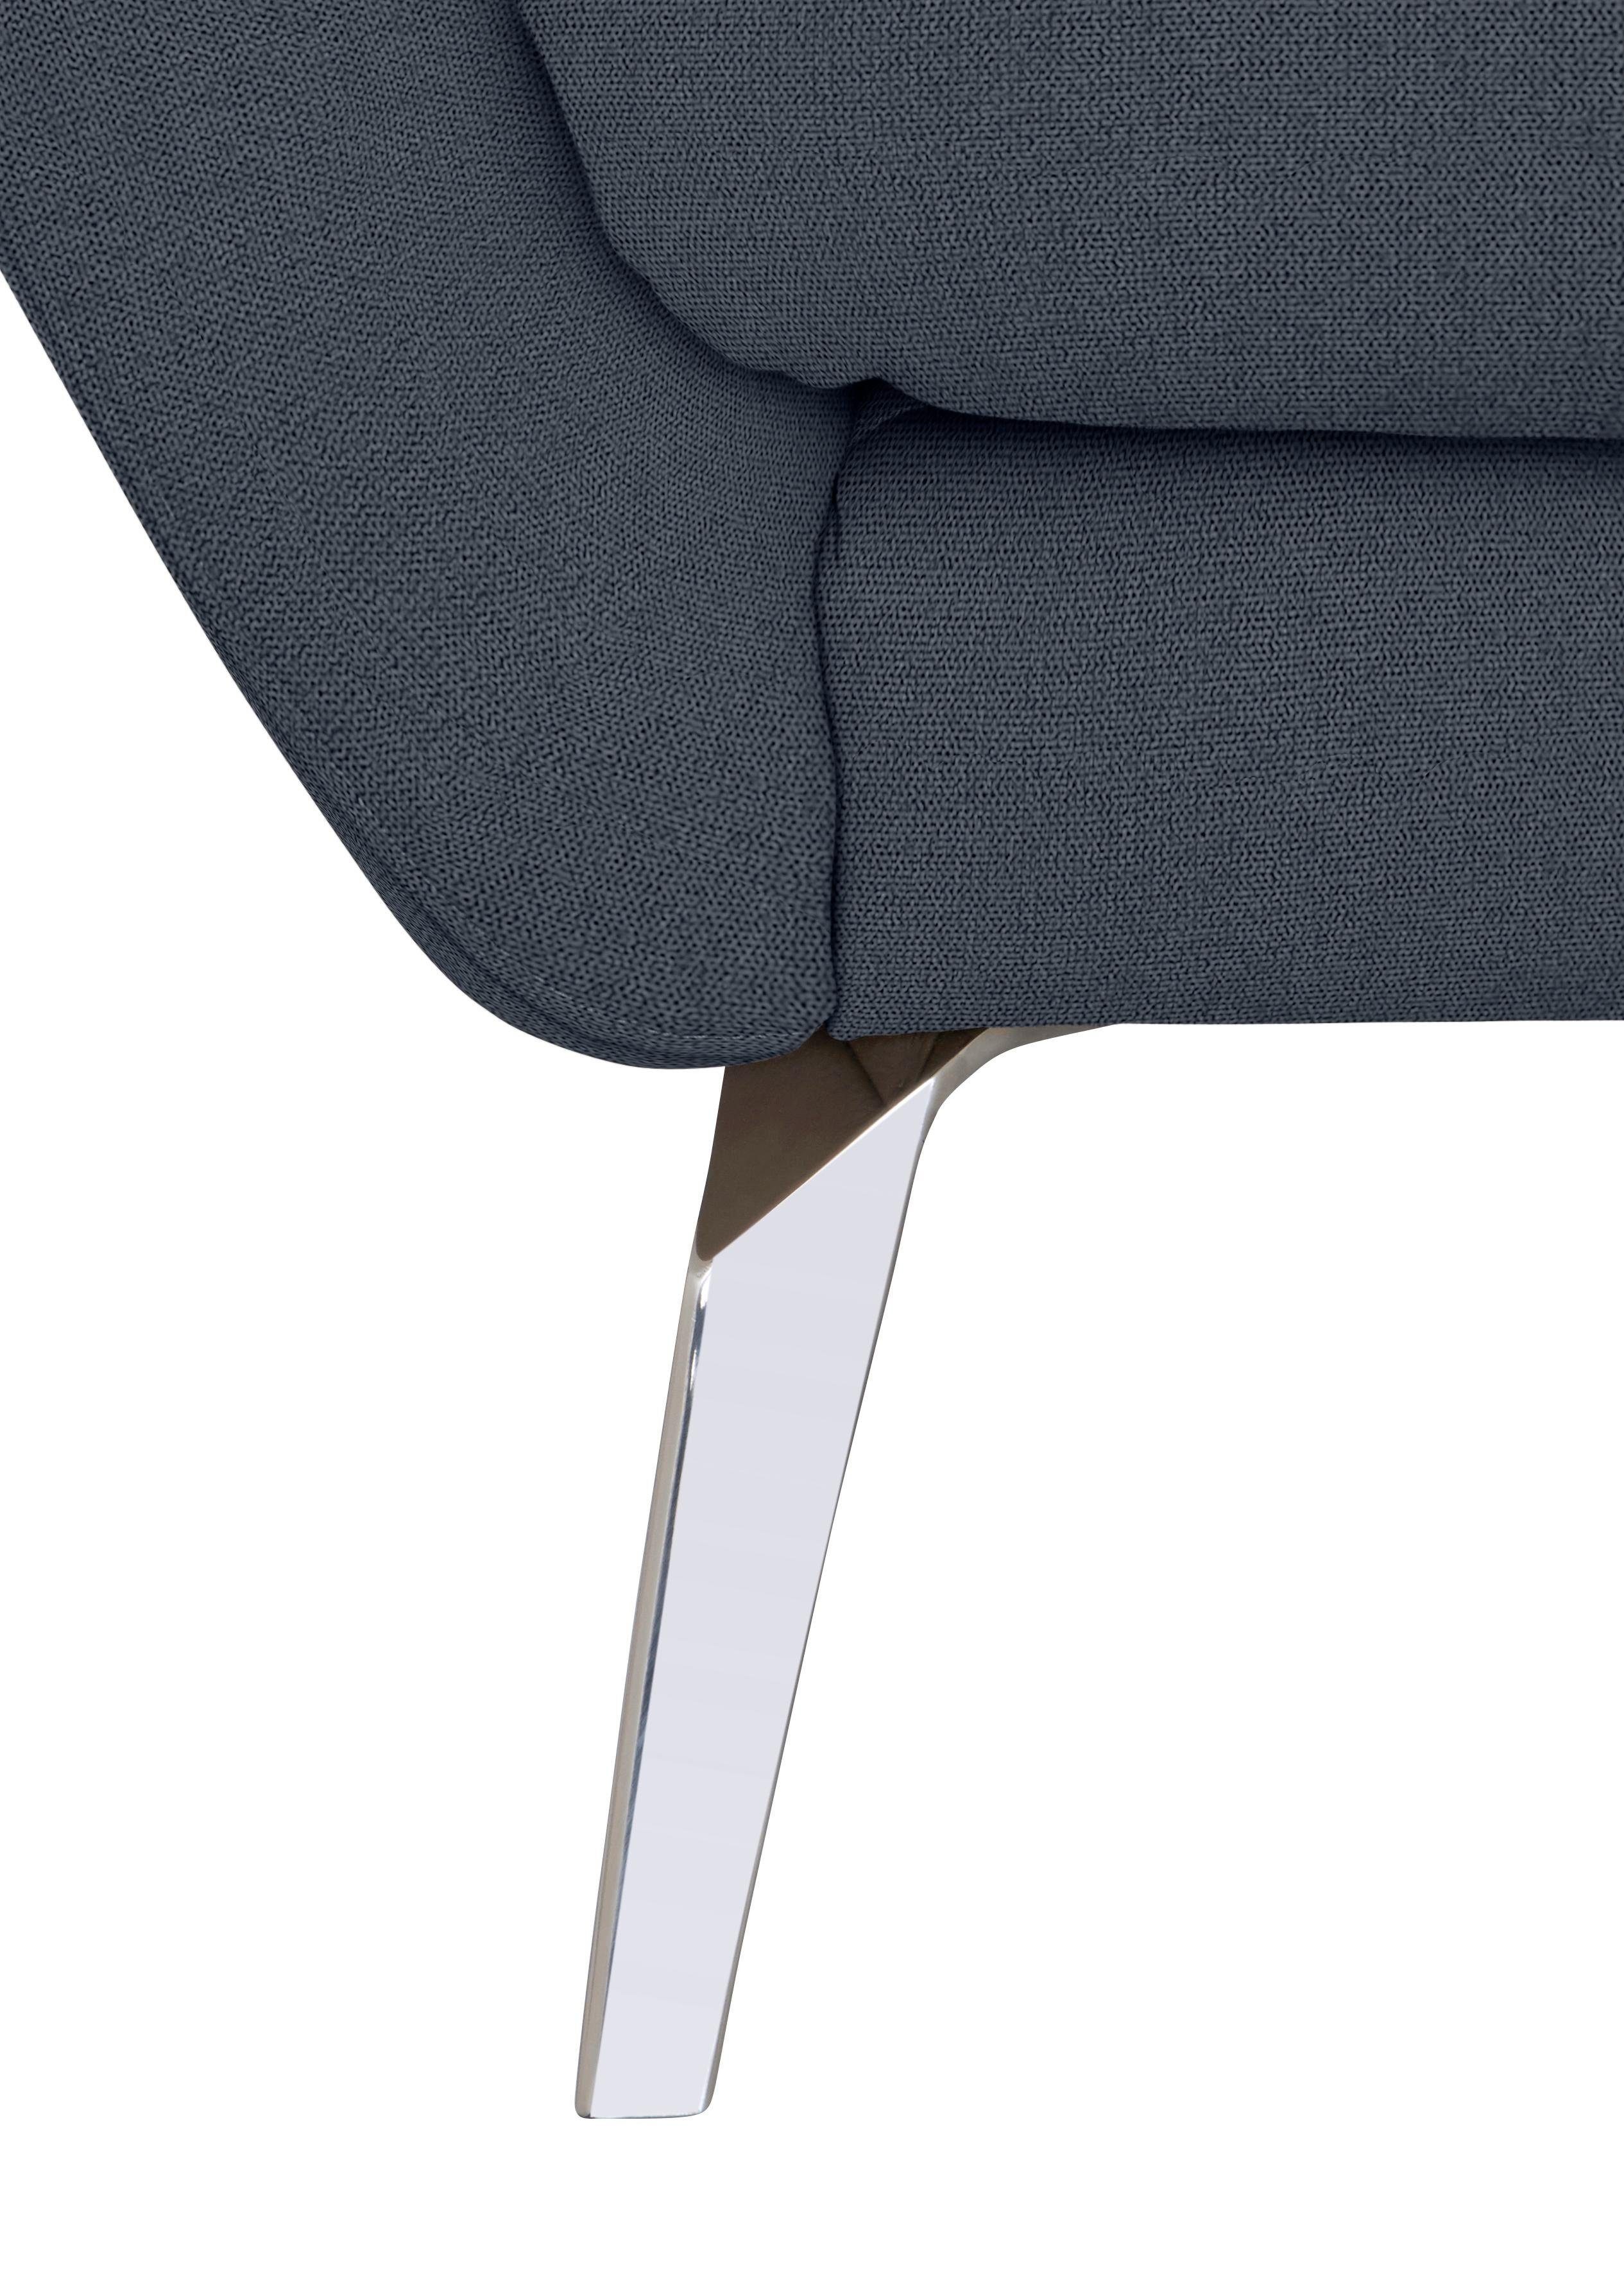 glänzend Füße mit Chrom im Sitz, W.SCHILLIG Heftung softy, Big-Sofa dekorativer